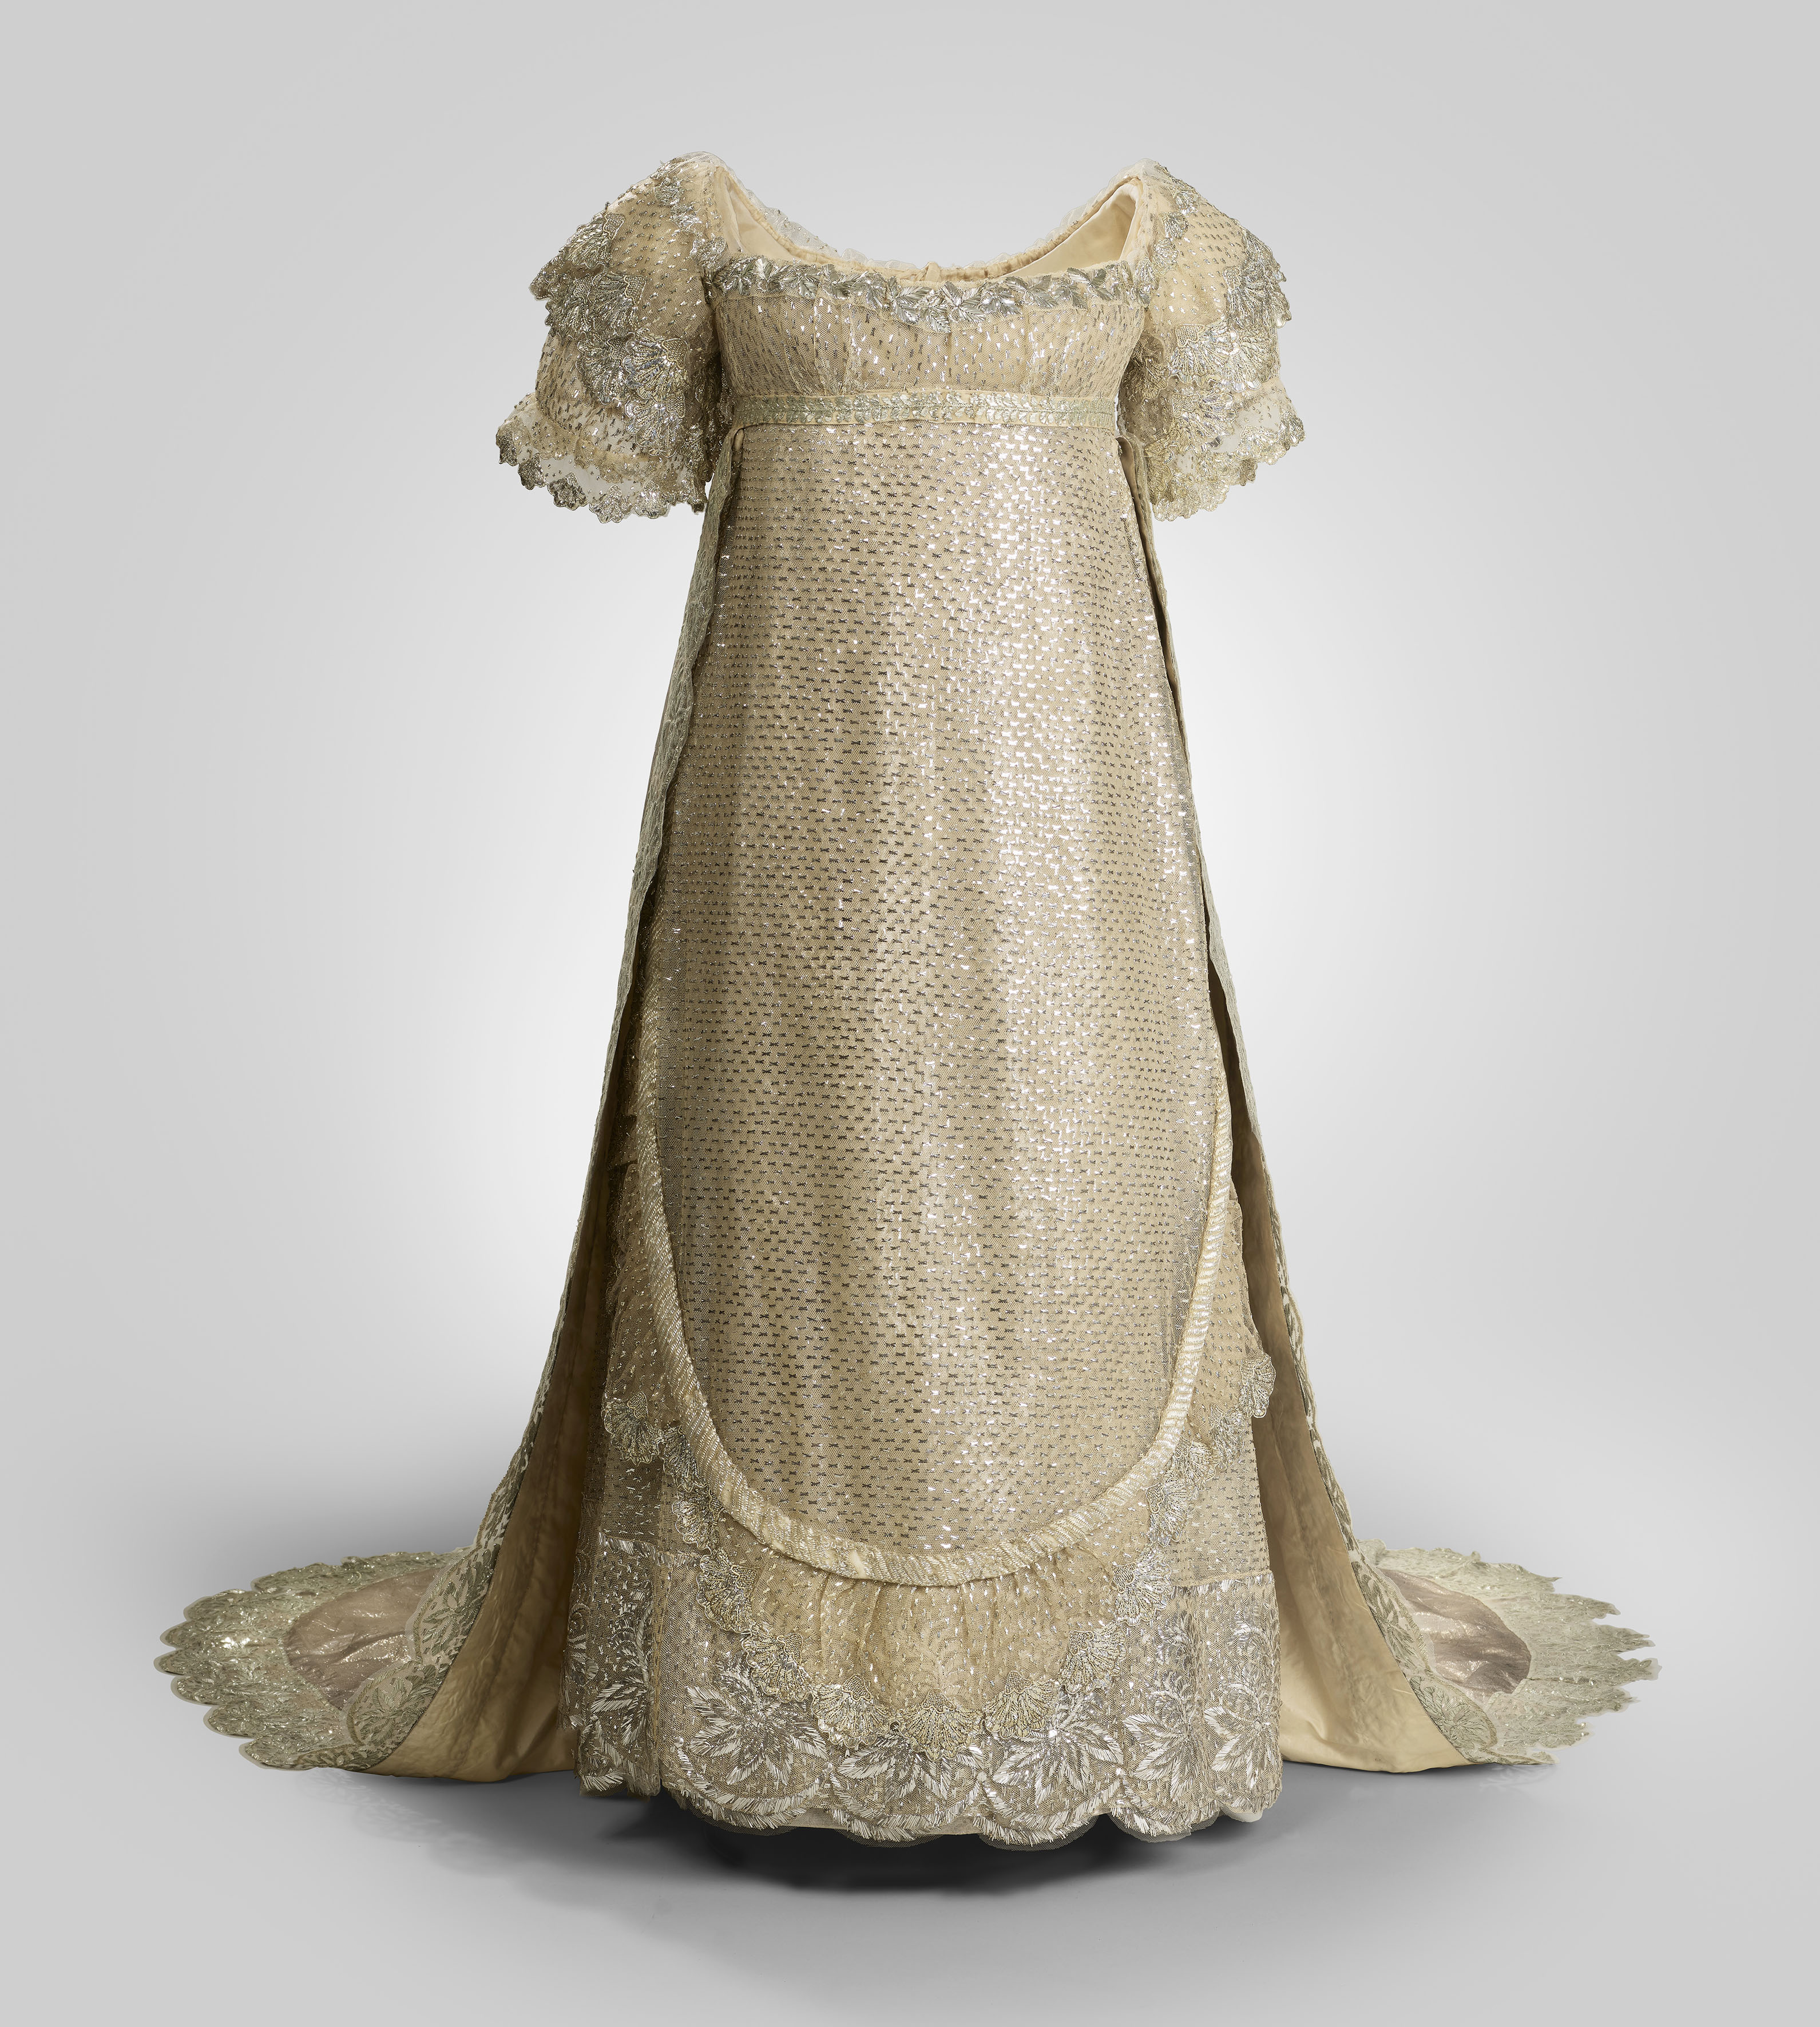 Princess Charlotte's wedding dress